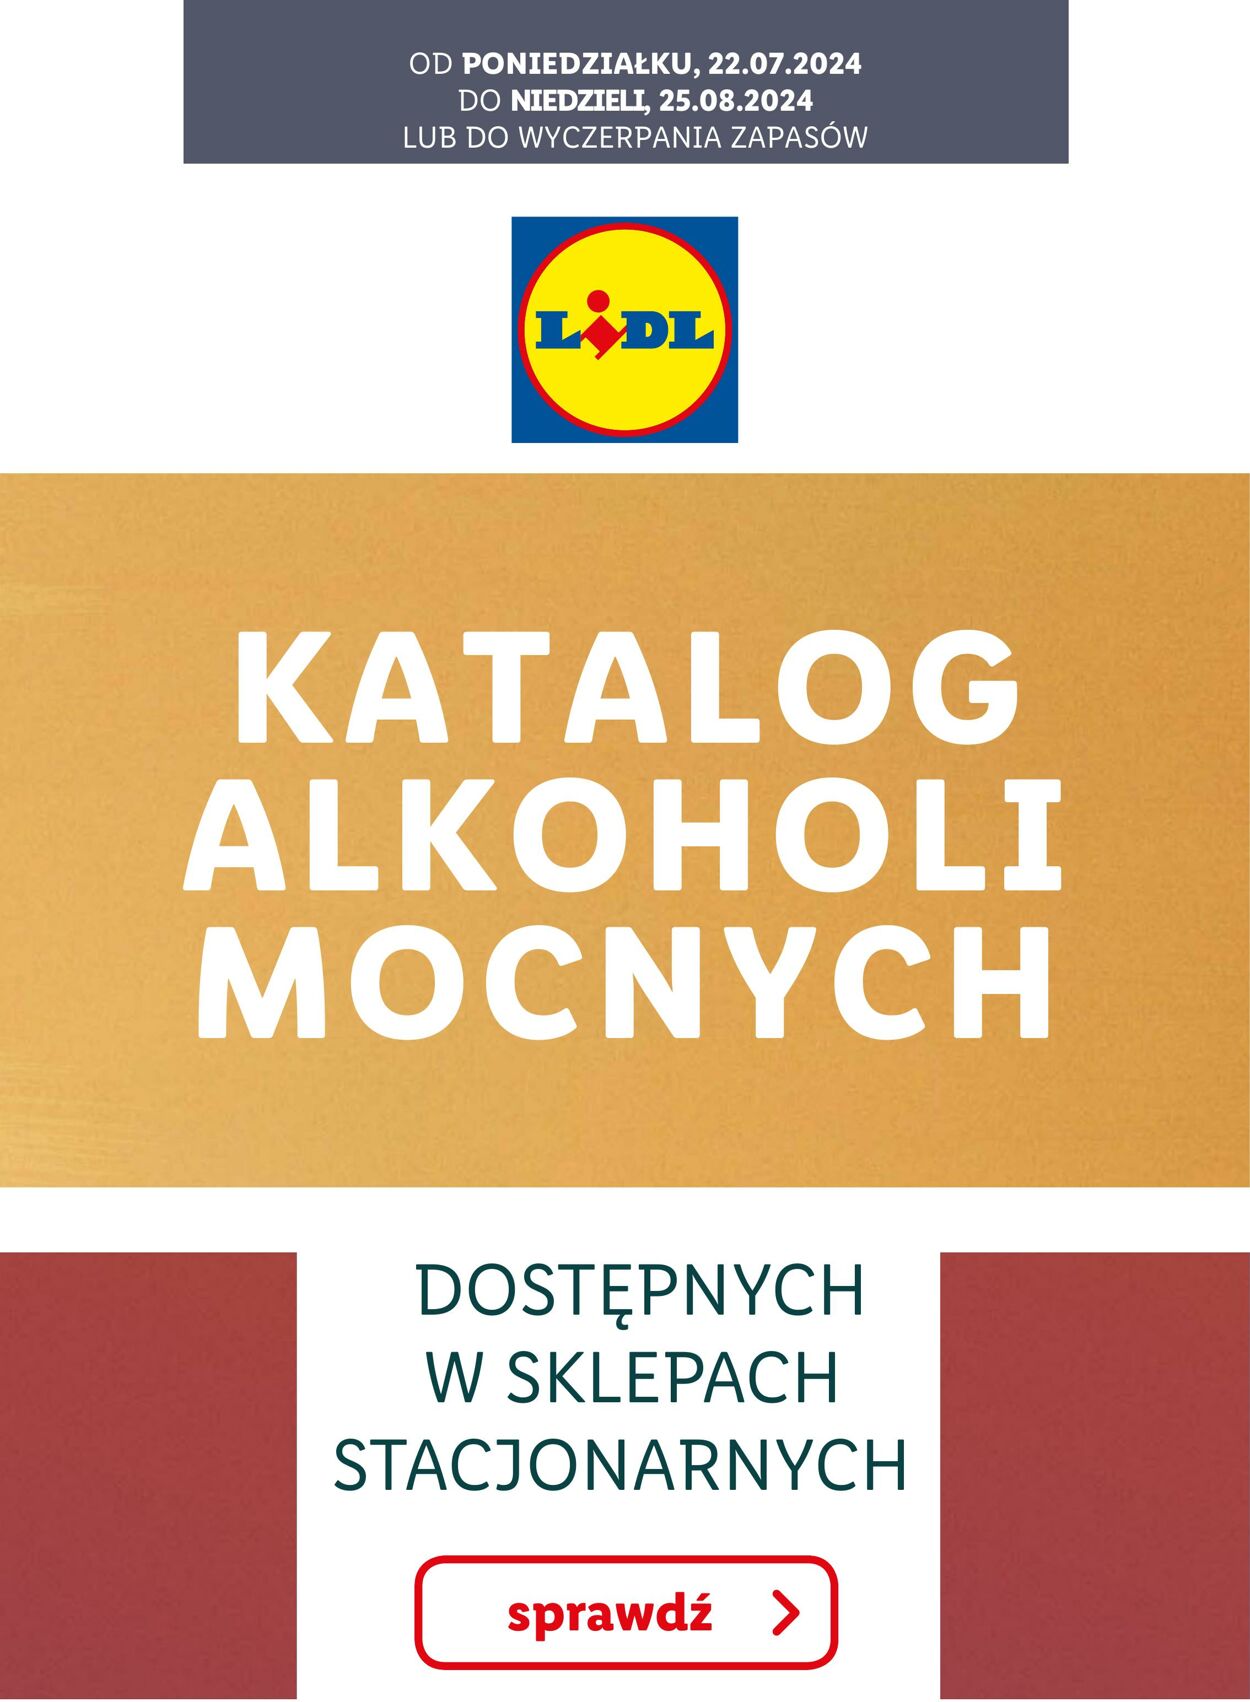 Gazetka Lidl - KATALOG ALKOHOLI MOCNYCH 22 lip, 2024 - 25 sie, 2024